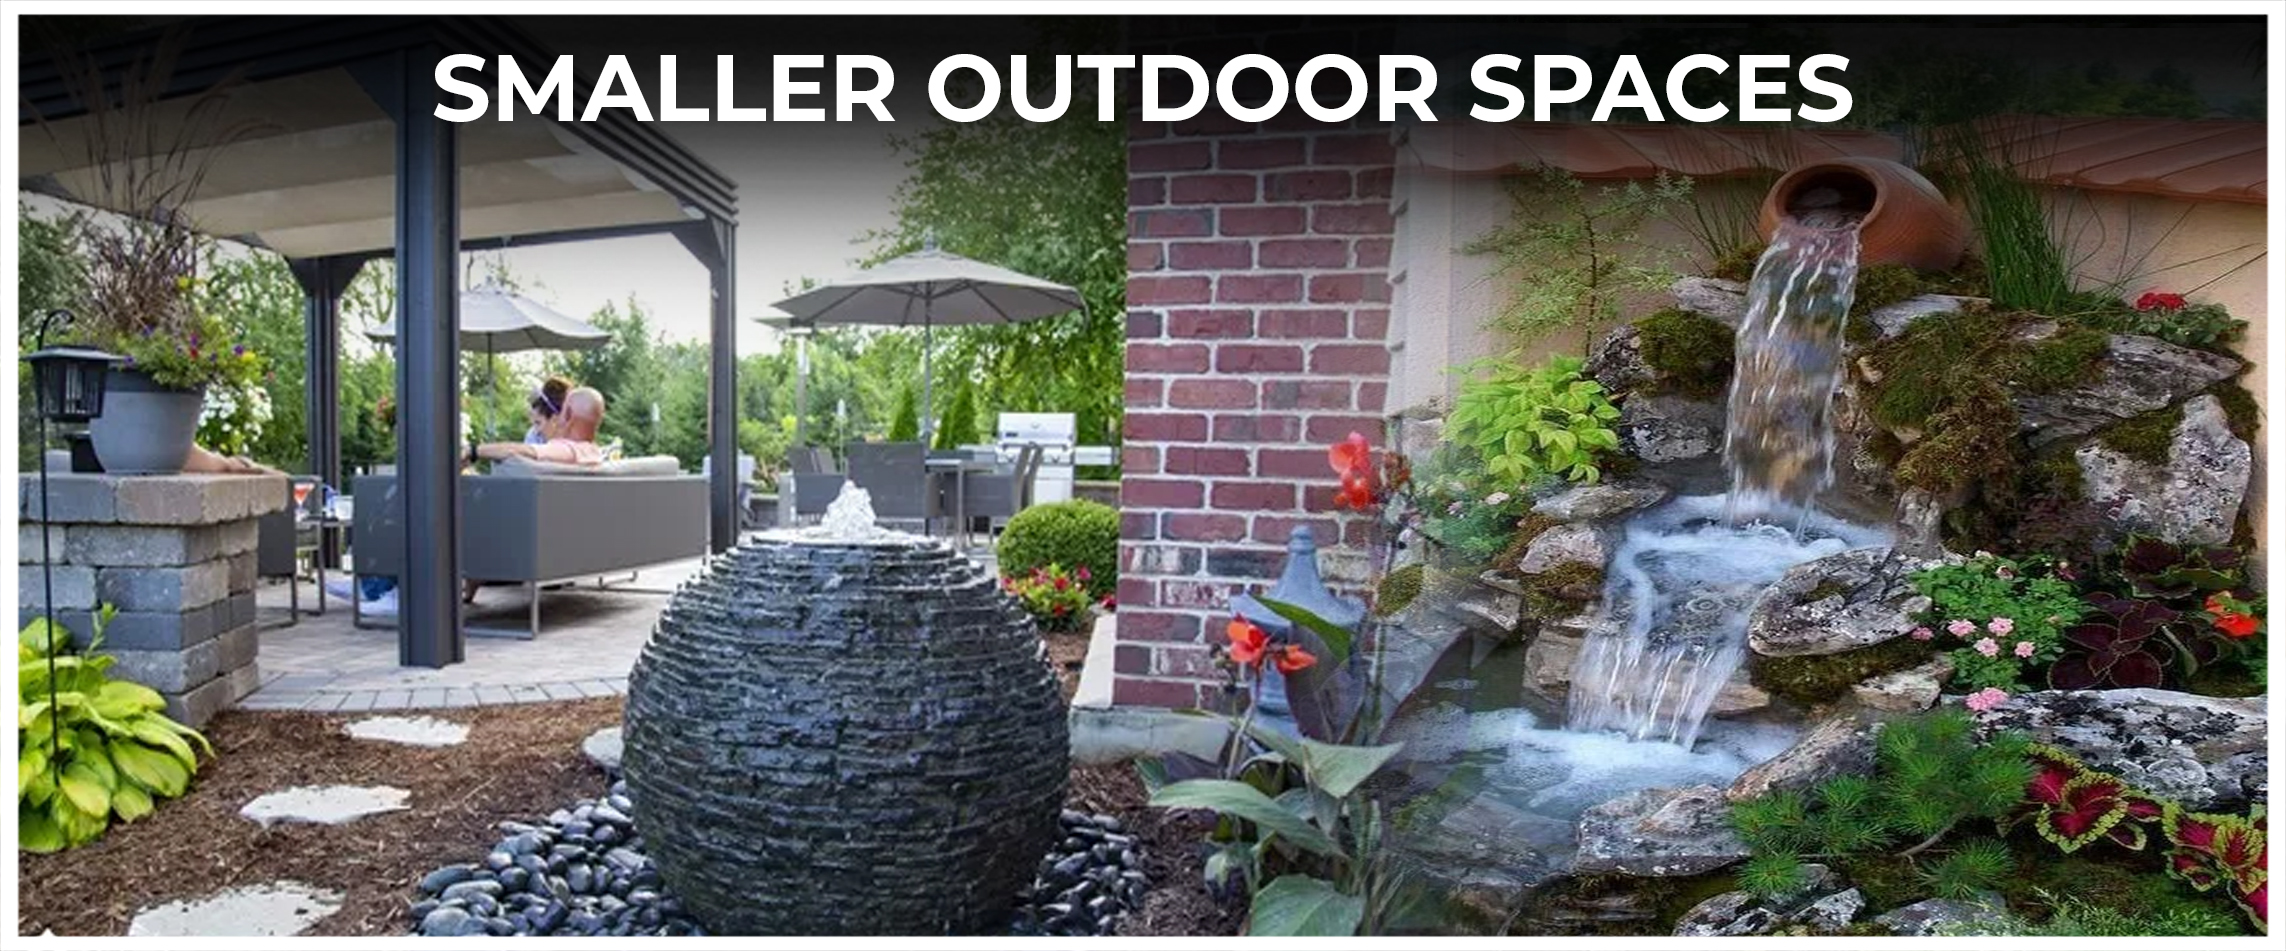 Smaller Outdoor Spaces